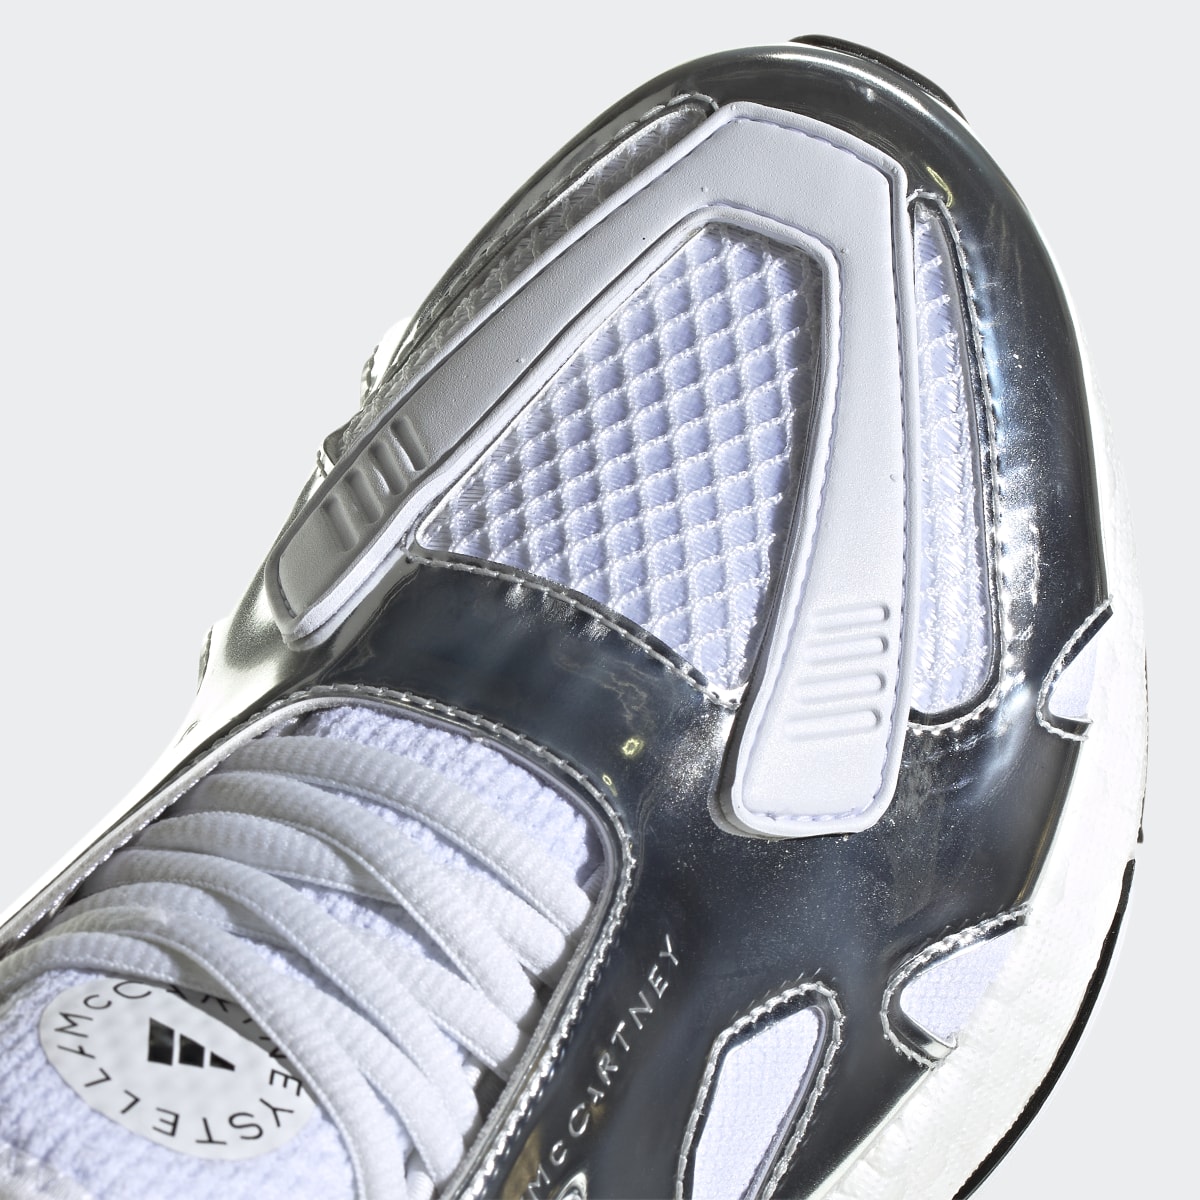 Adidas by Stella McCartney UltraBOOST 22 Shoes. 9